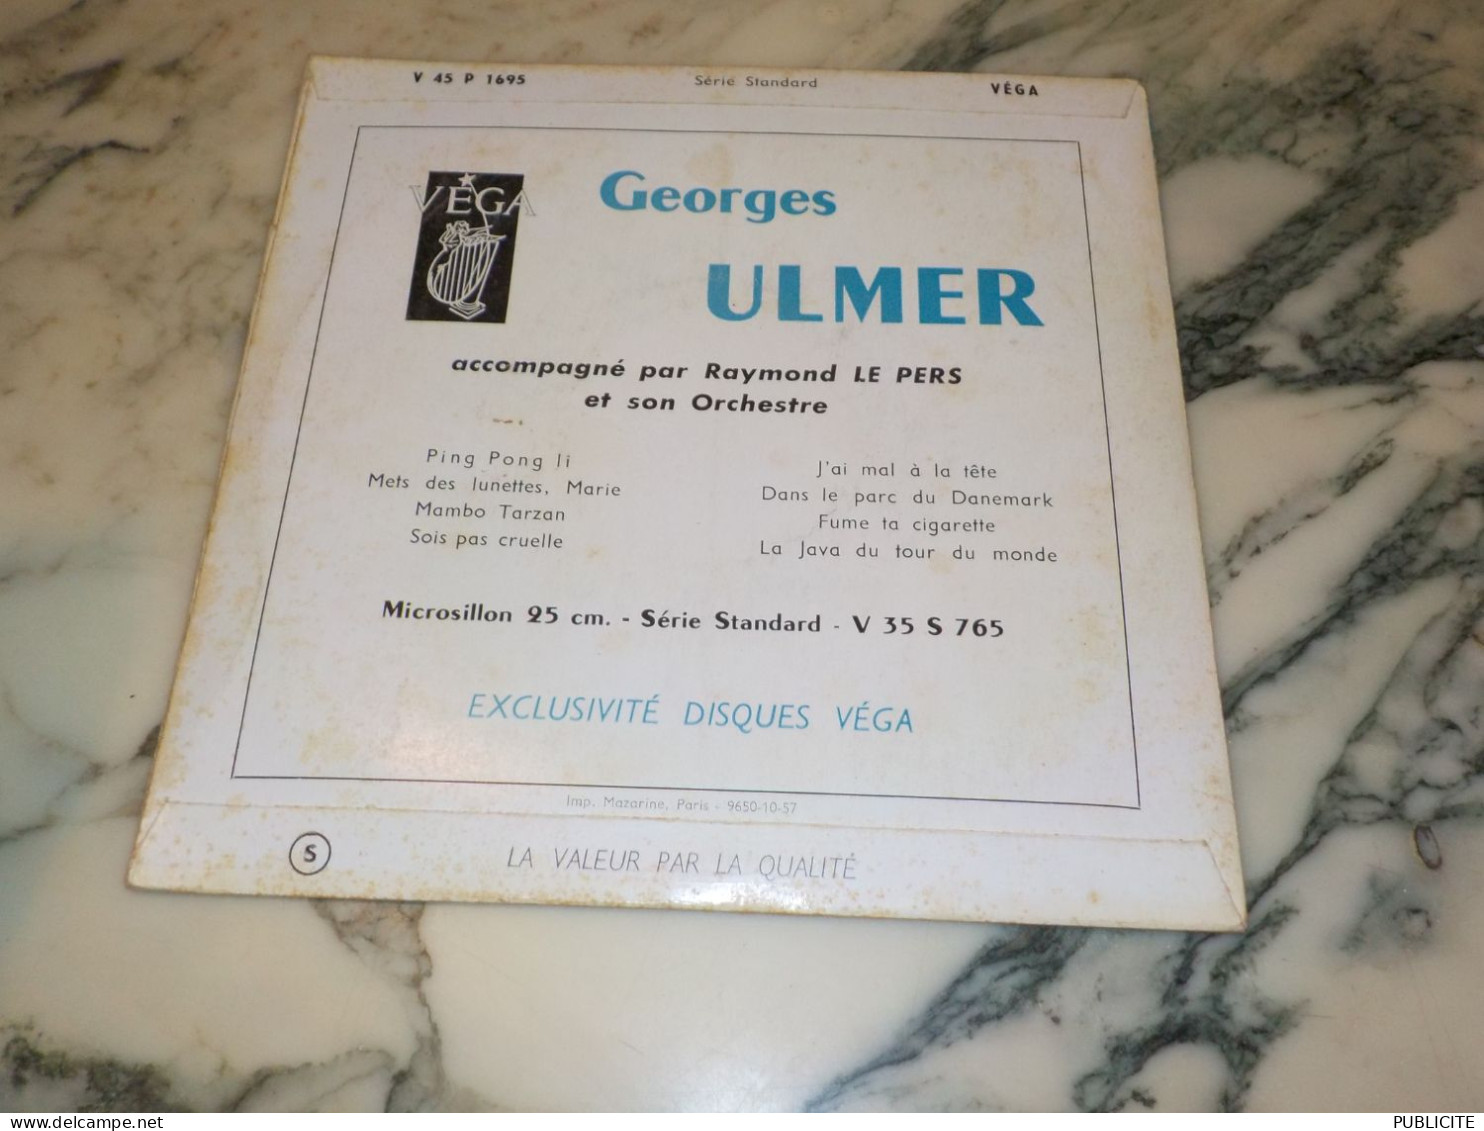 45 TOURS DANS LE PARC DU DANEMARK GEORGE ULMER 1956 - Humor, Cabaret